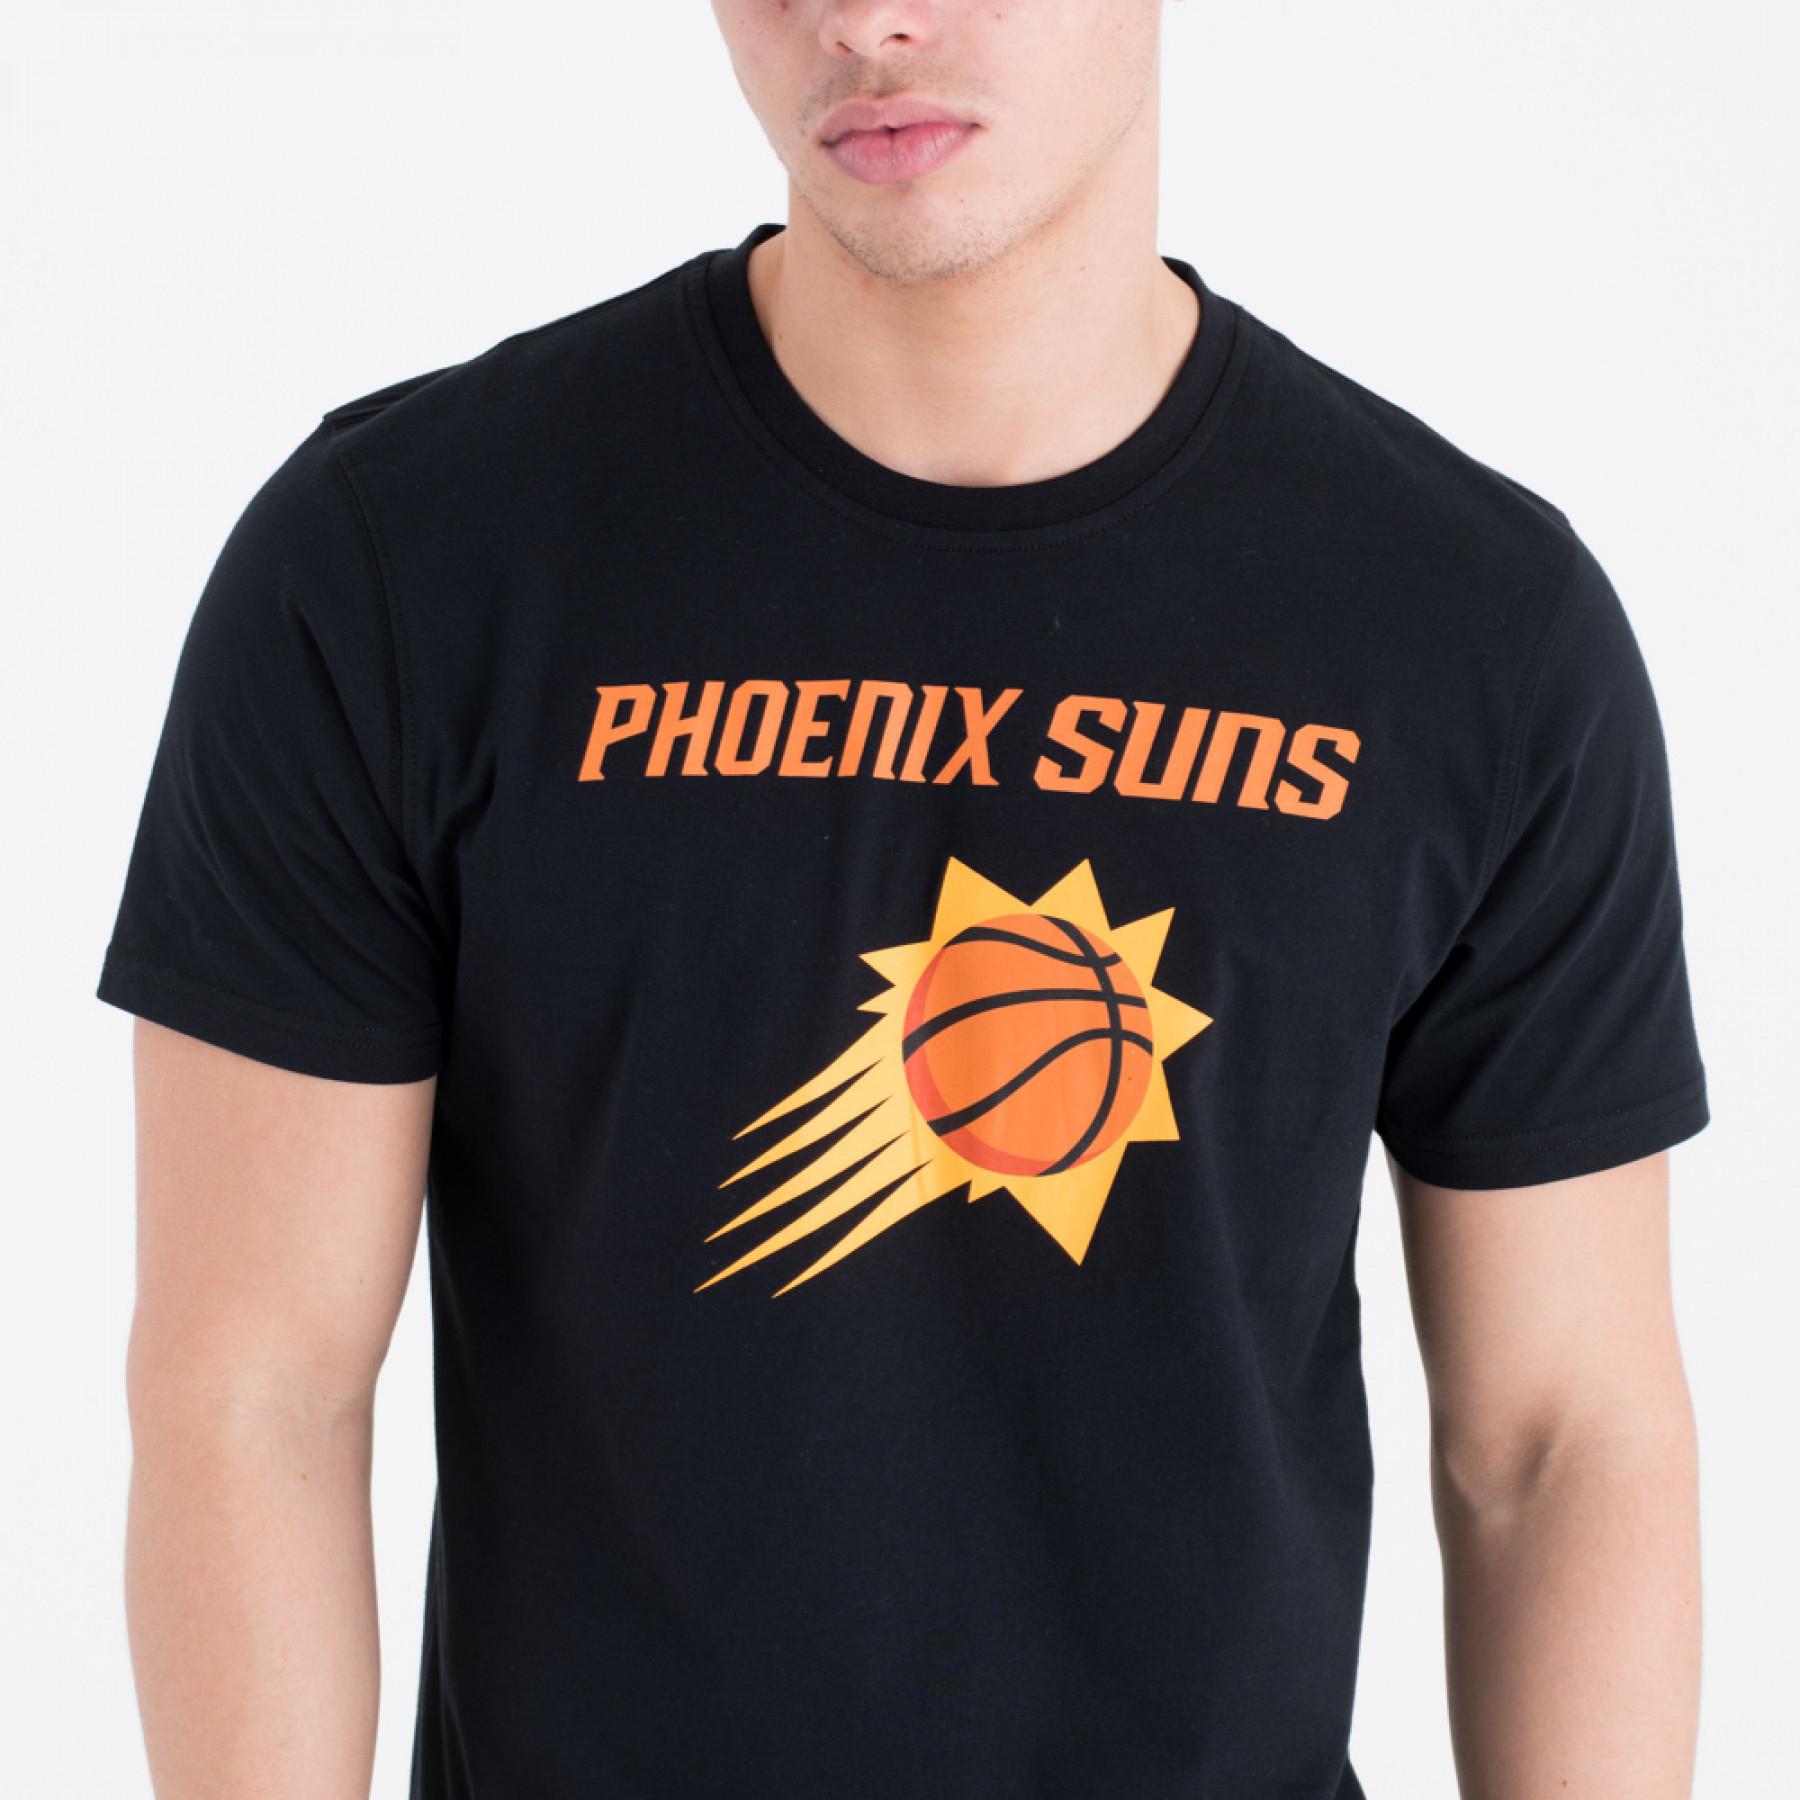  New EraT - s h i r t   logo Phoenix Suns